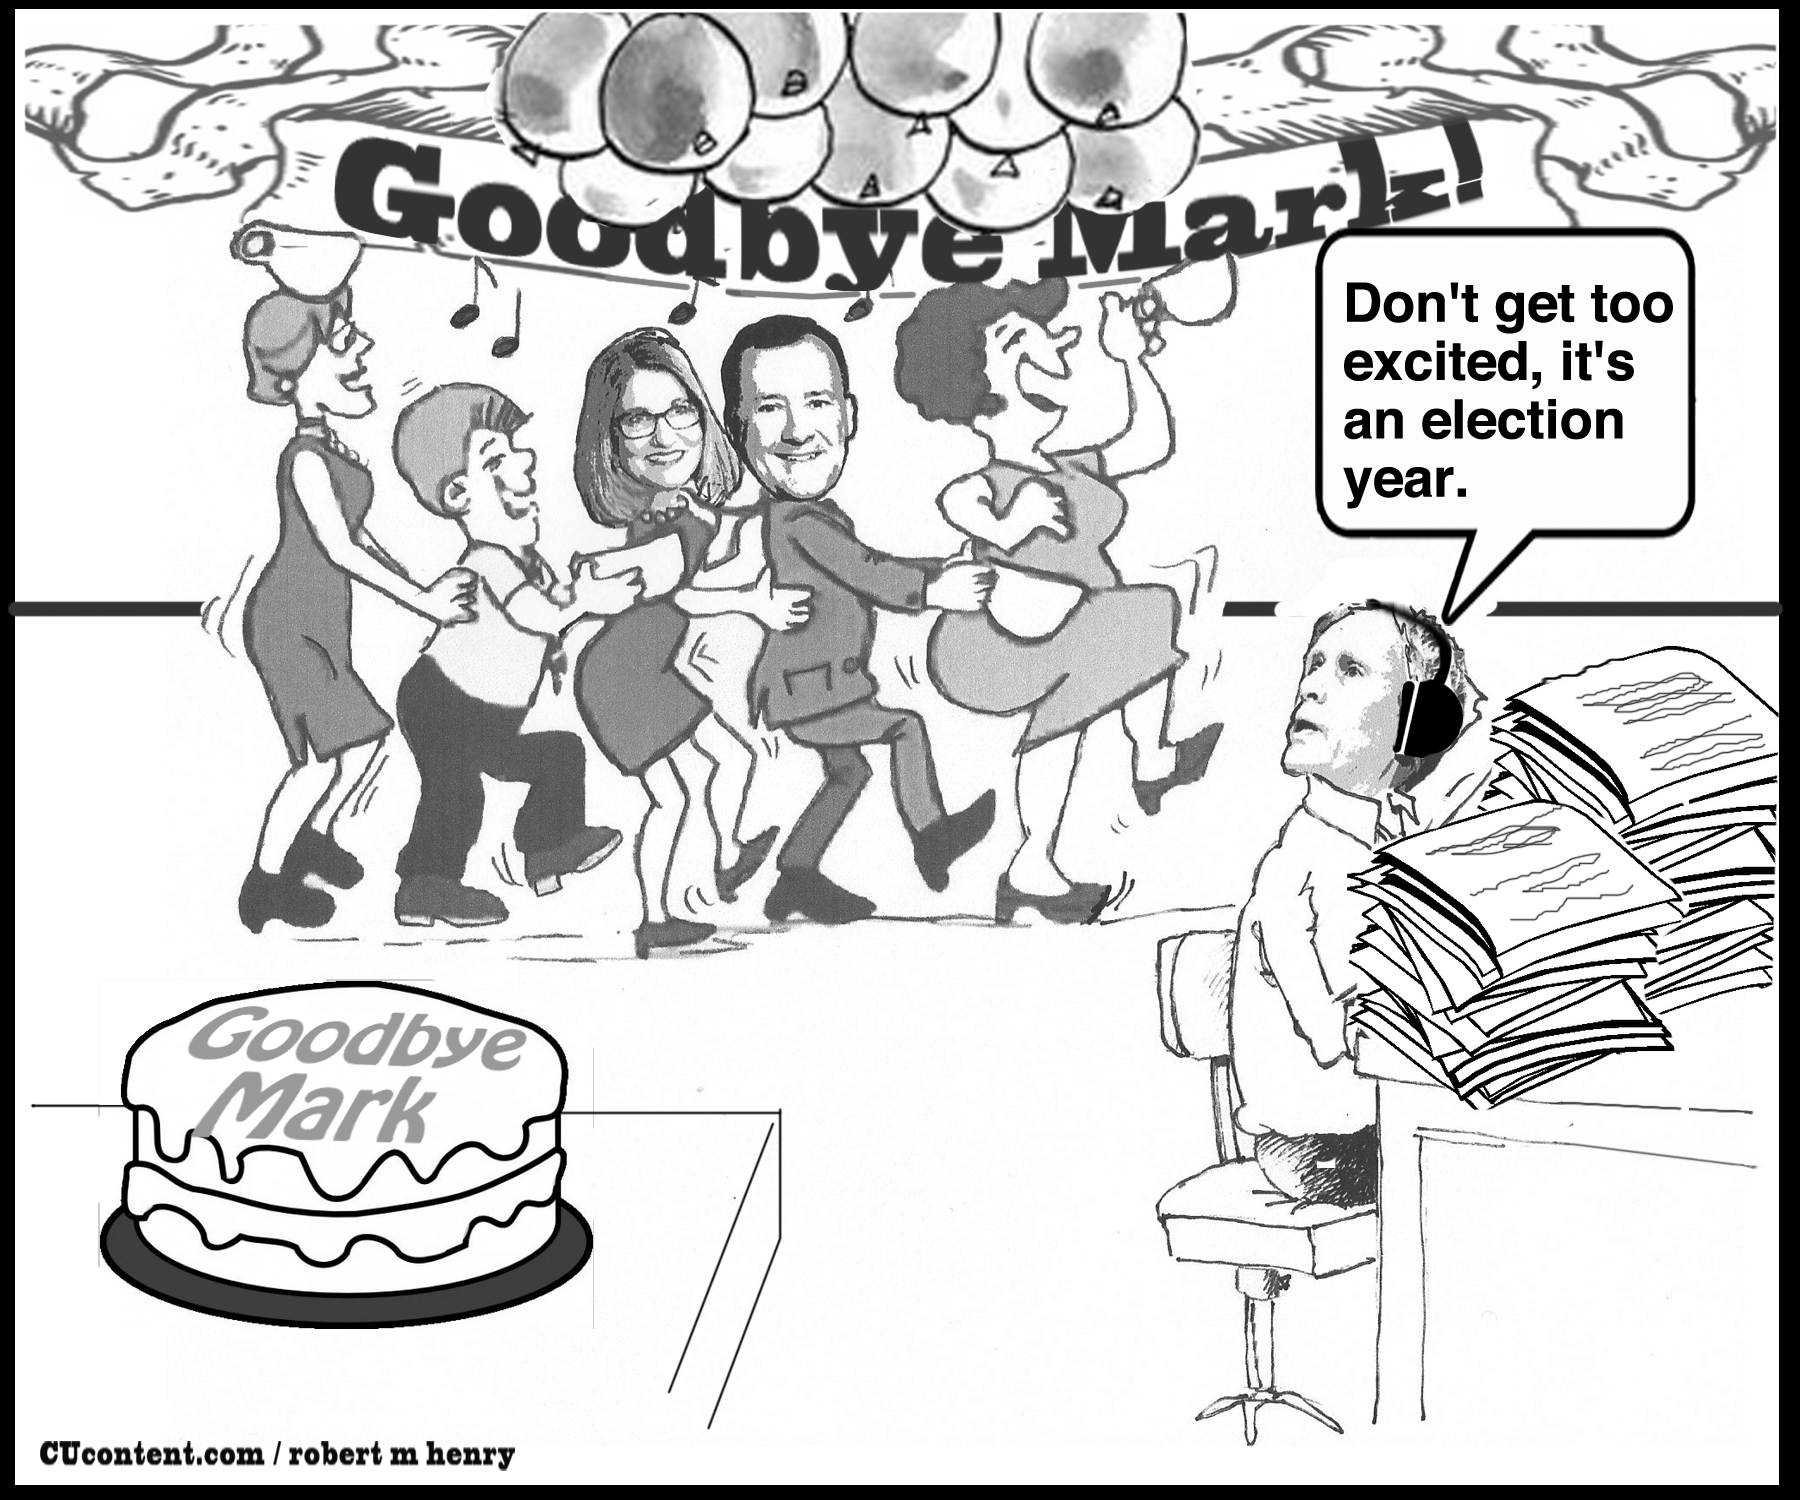 So Long, Farewell: Editorial Cartoon | Credit Union Times